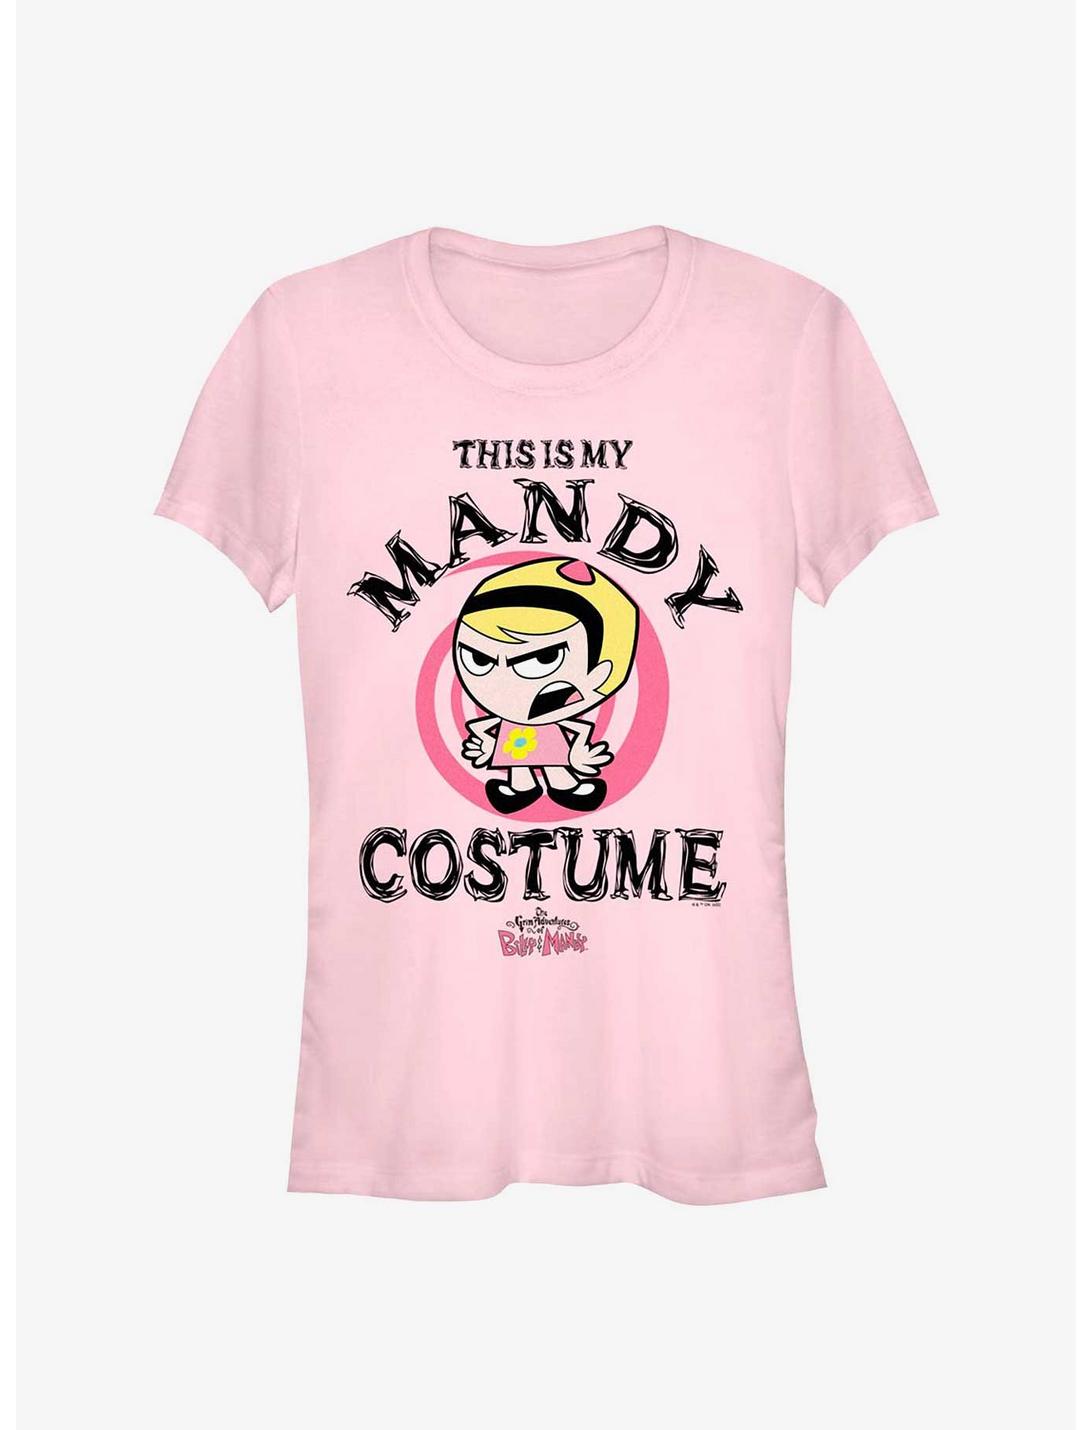 Cartoon Network The Grim Adventures of Billy & Mandy My Mandy Costume Girls T-Shirt, LIGHT PINK, hi-res